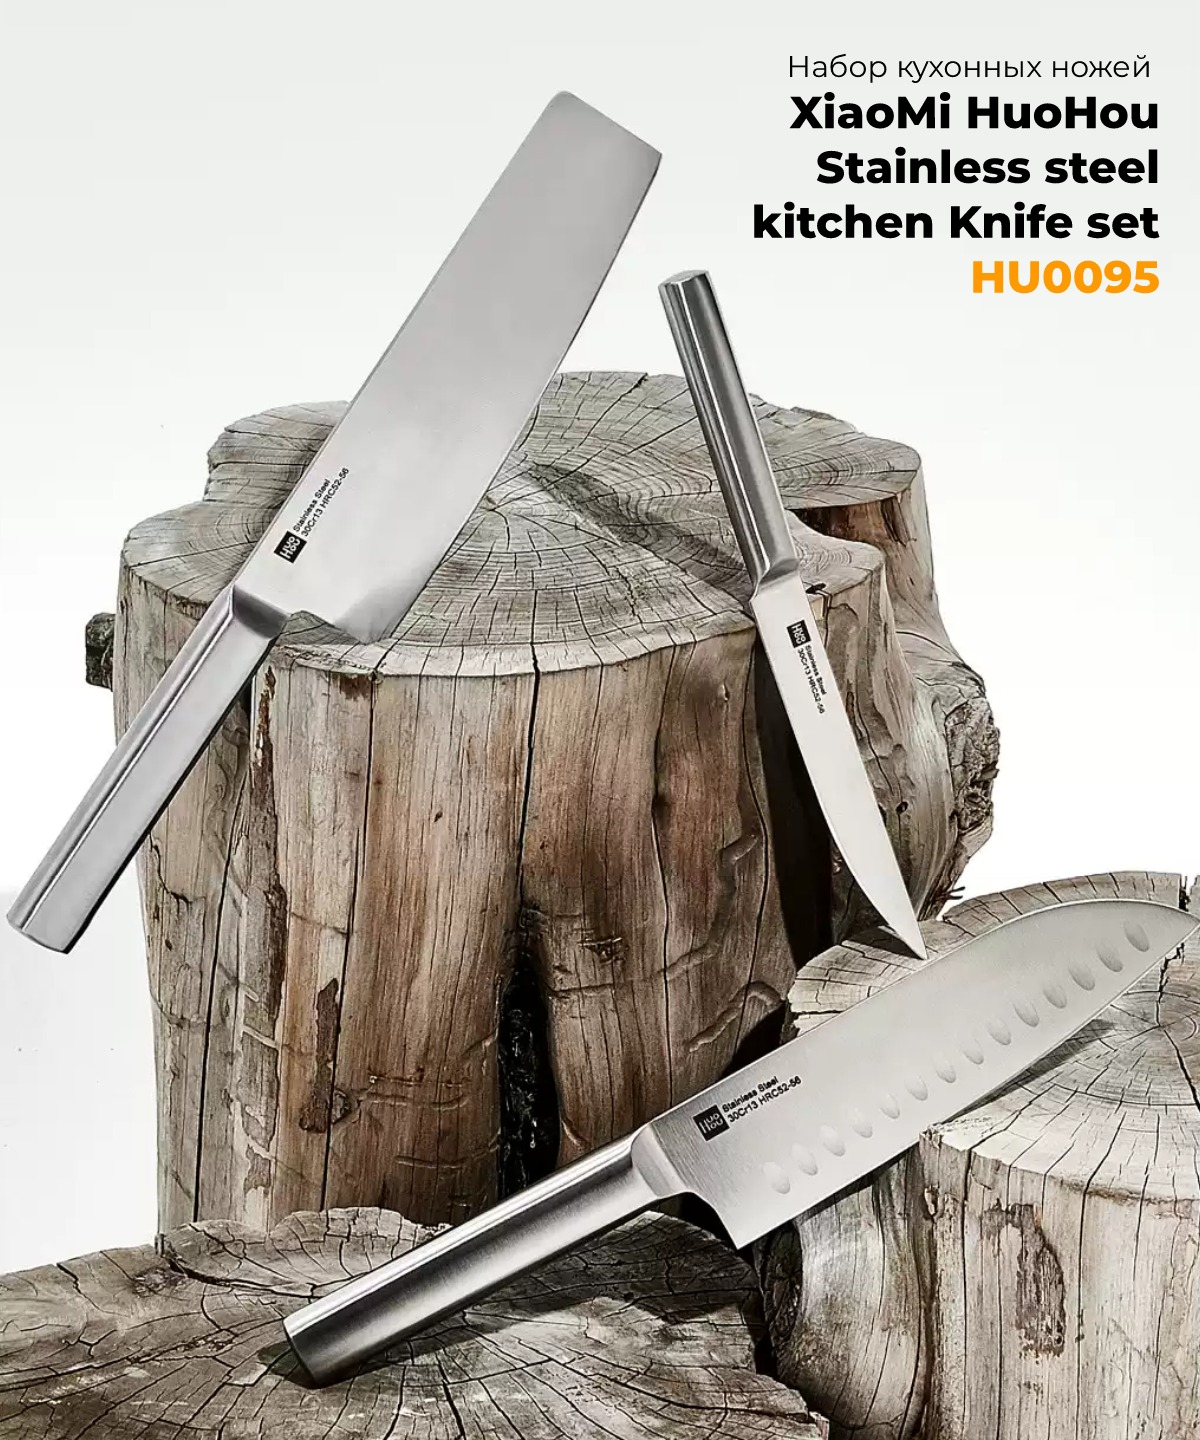 XiaoMi-HuoHou-Stainless-steel-kitchen-Knife-set-HU0095-01